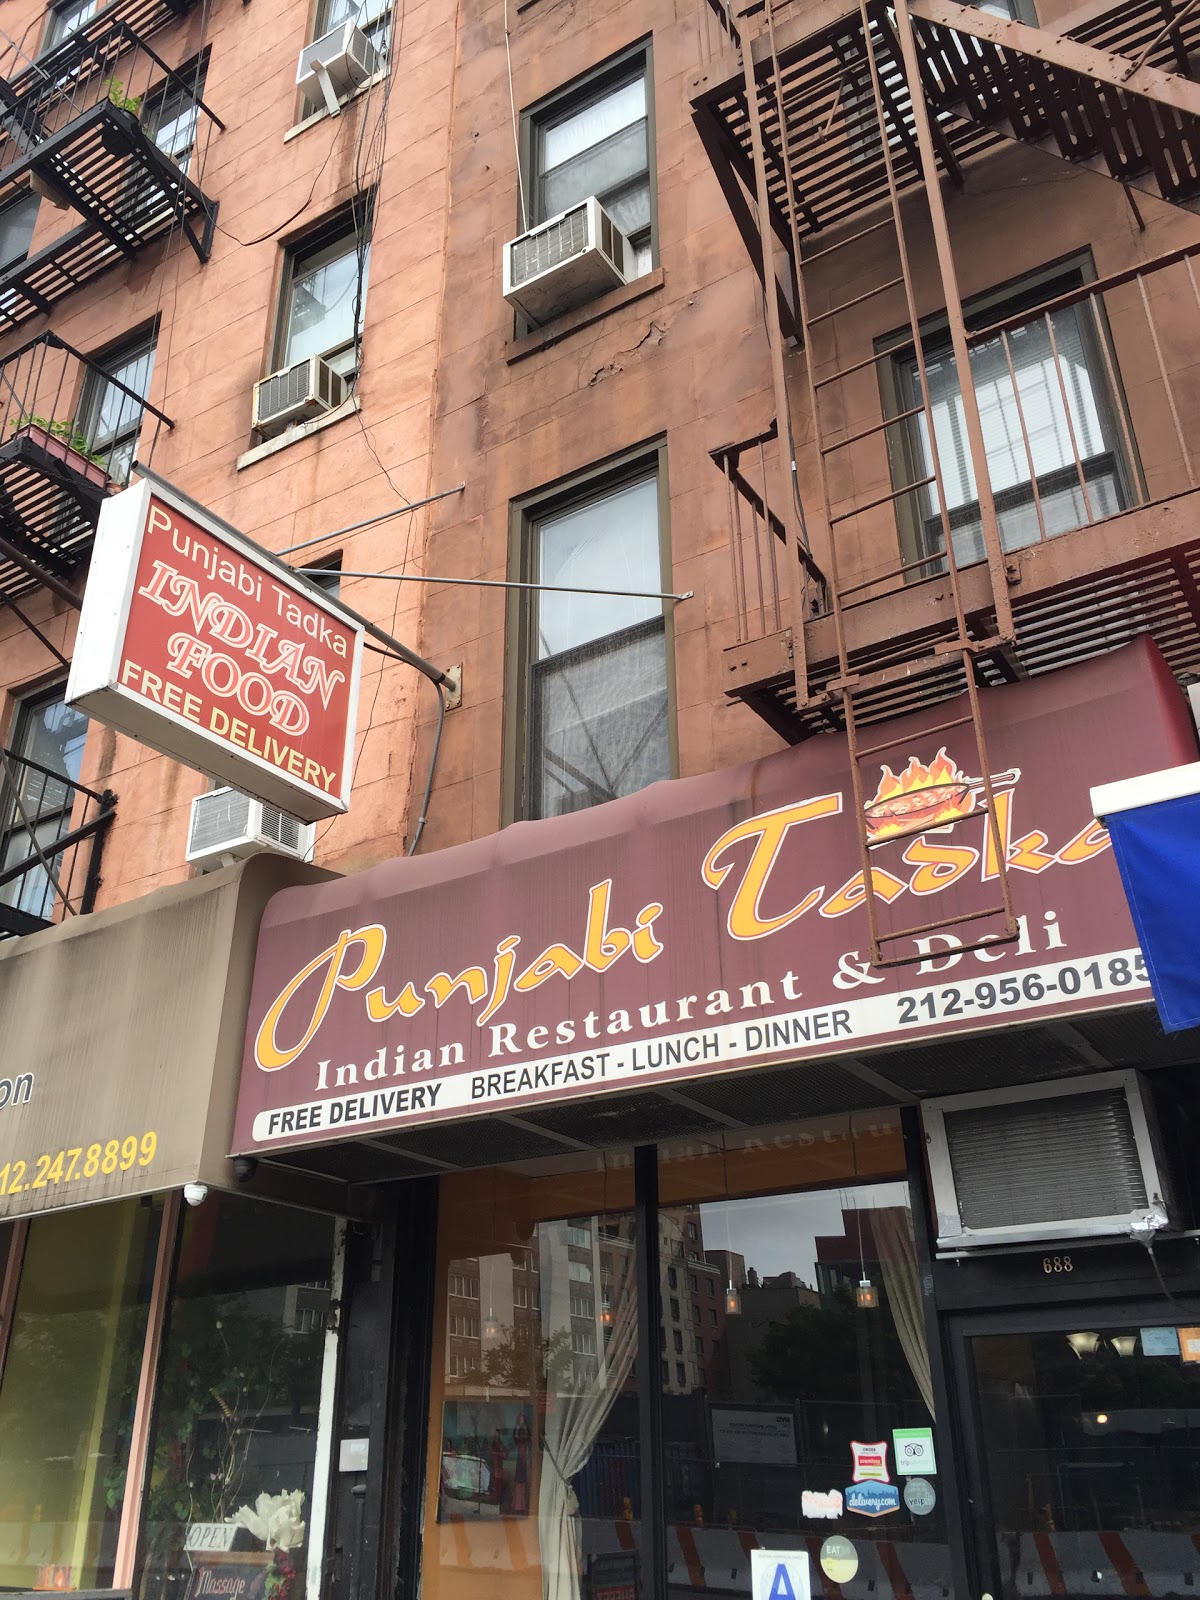 Photo of Punjabi Tadka in New York City, New York, United States - 1 Picture of Restaurant, Food, Point of interest, Establishment